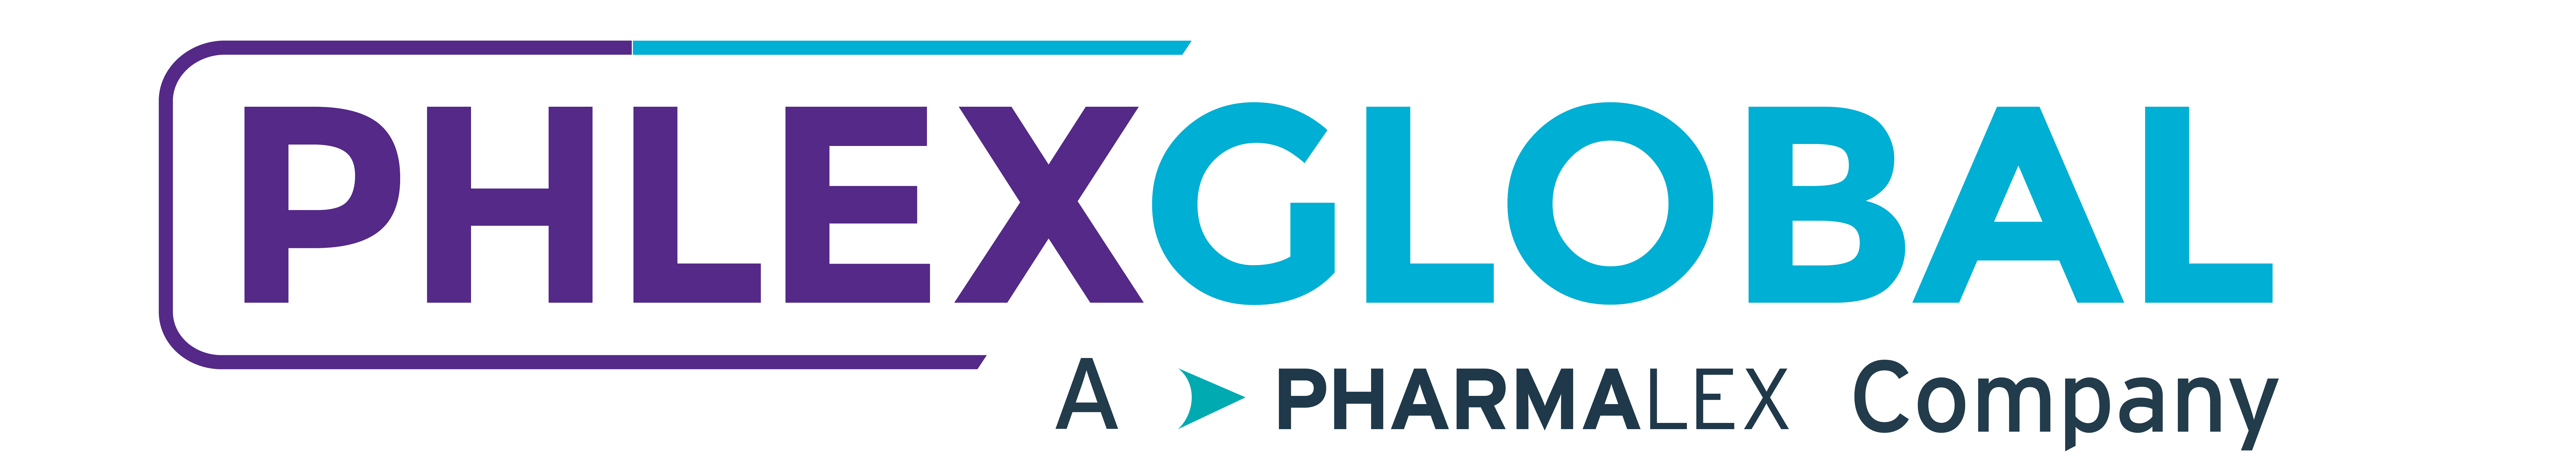 phlexglobal_Logo-a_pharmalex-company-high-res